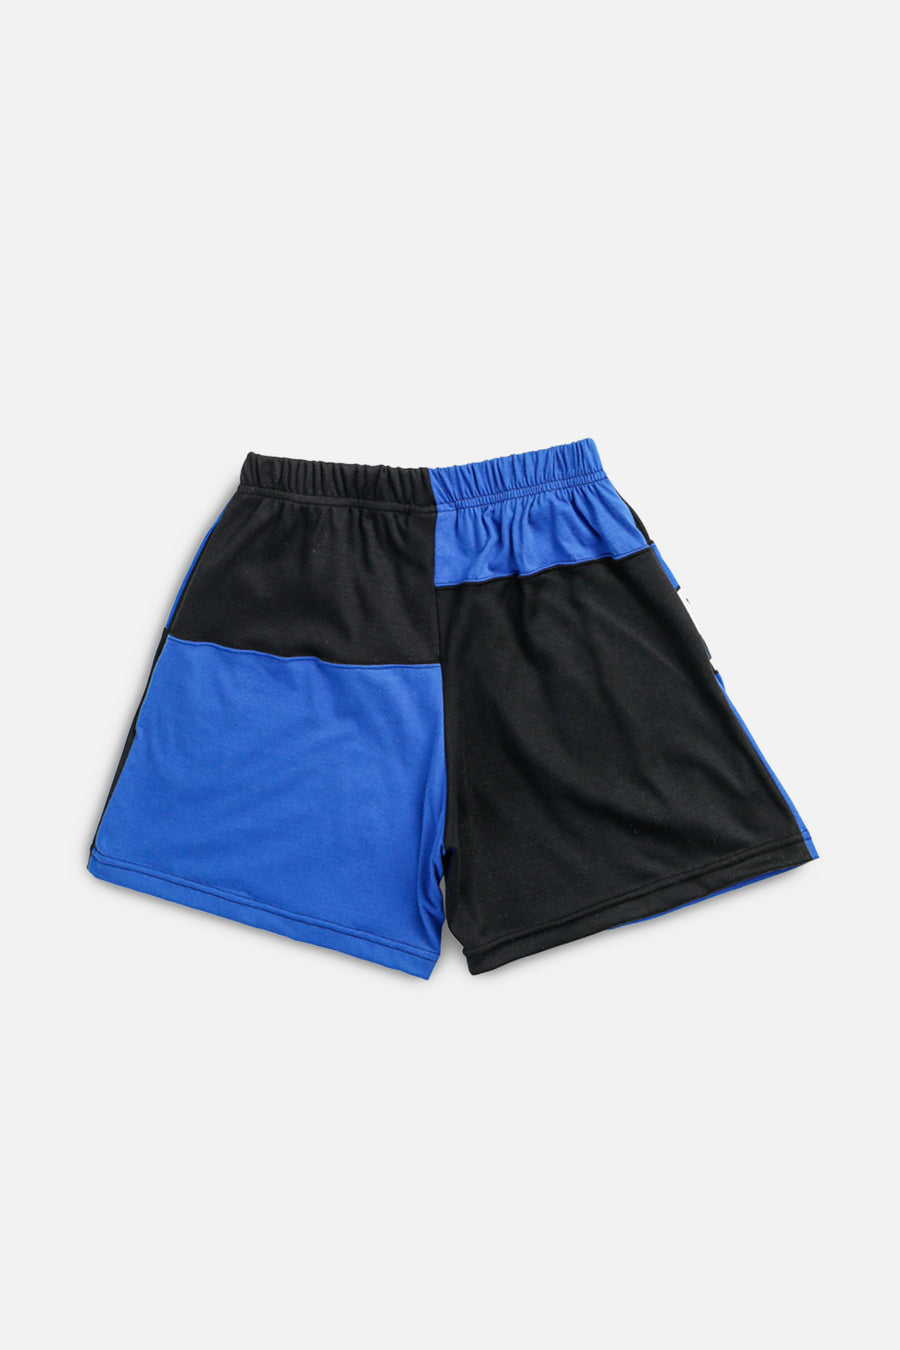 Unisex Rework Duke University Basketball Patchwork Tee Shorts - XS